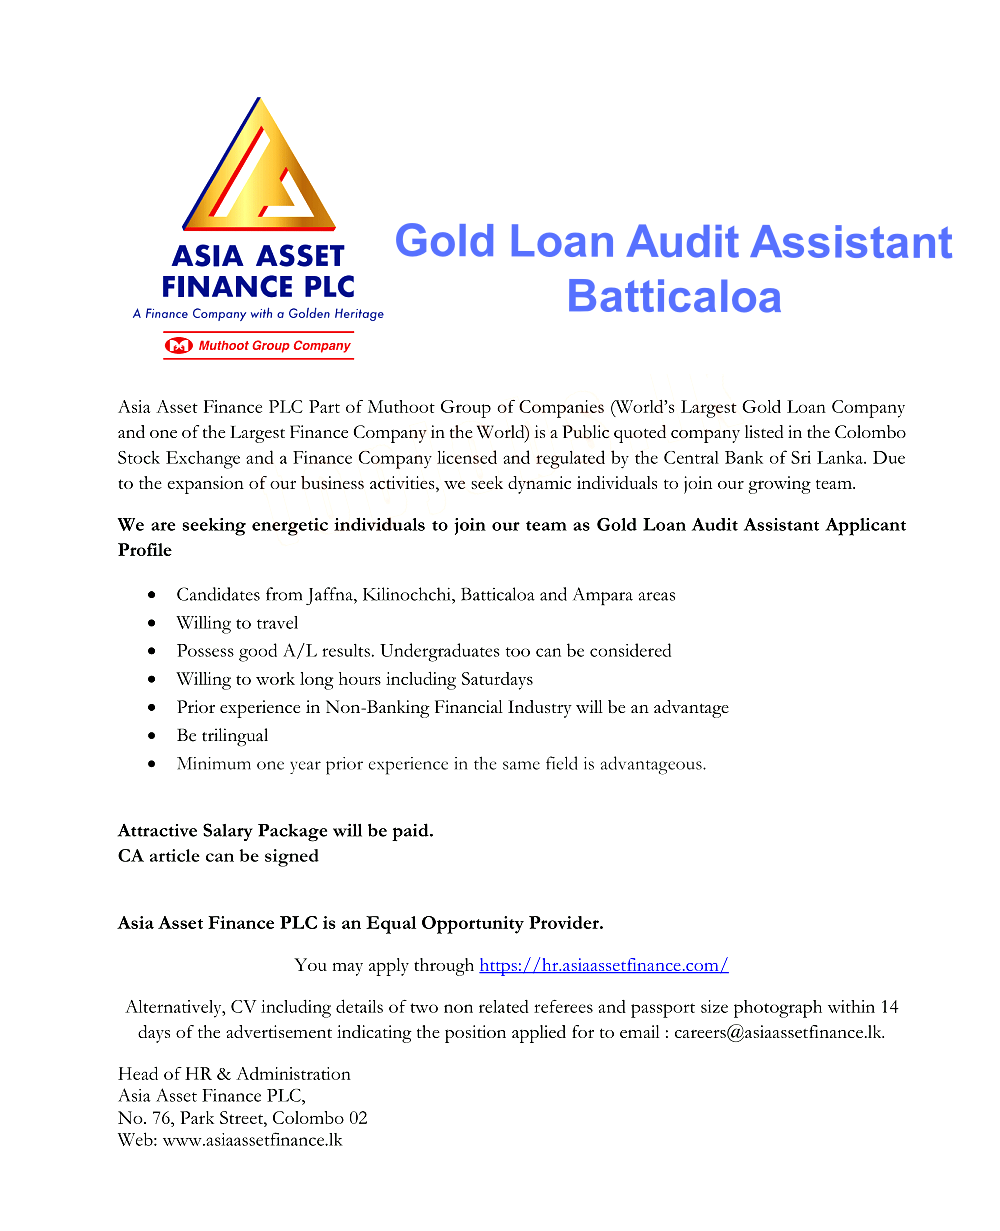 Gold Loan Audit Assistant Job Vacancy - Batticaloa Asia Asset Finance Jobs Details